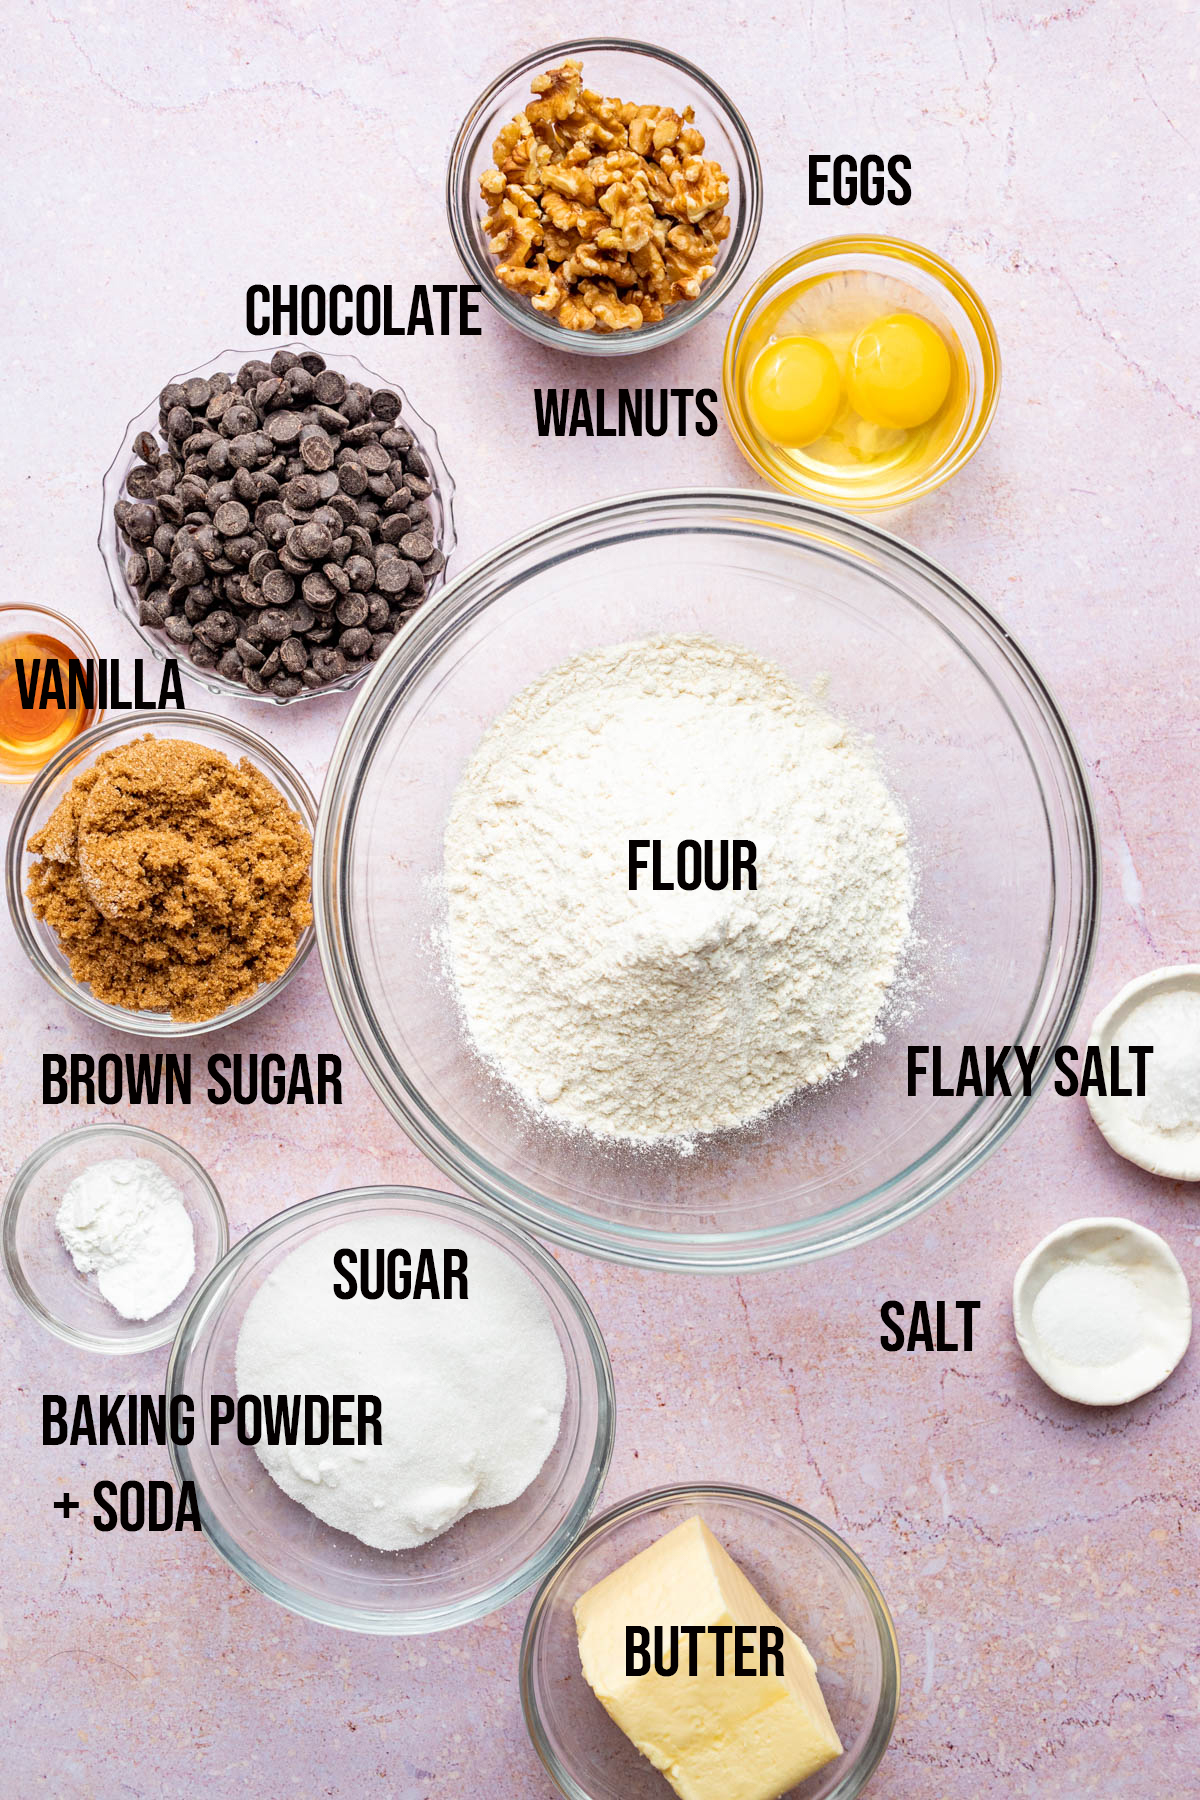 Ingredients to make walnut chocolate chip cookies.